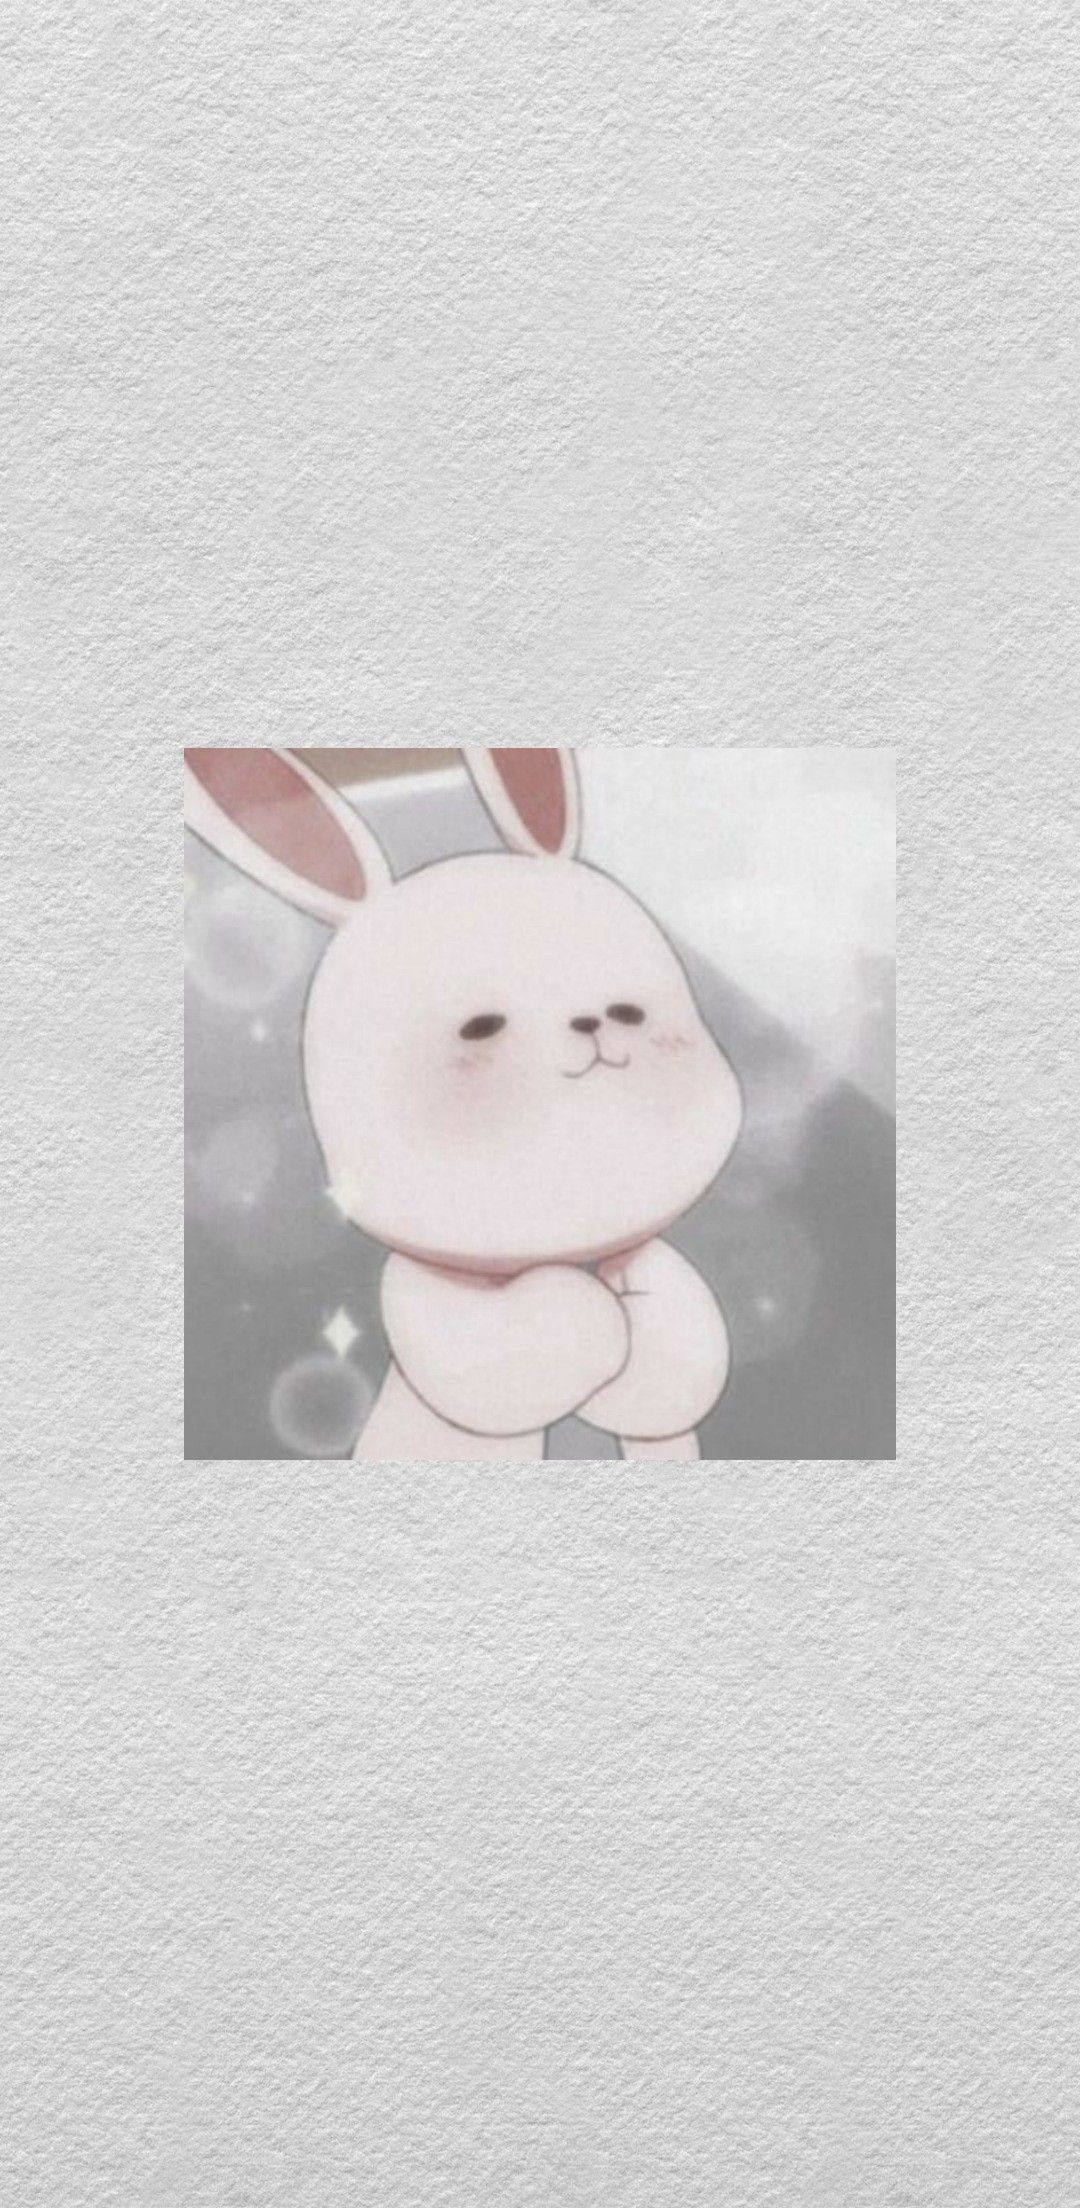 White cute aesthetic cartoon bunny wallpaper for iPhone and Android. Bunny wallpaper, Cute anime wallpaper, Rabbit wallpaper